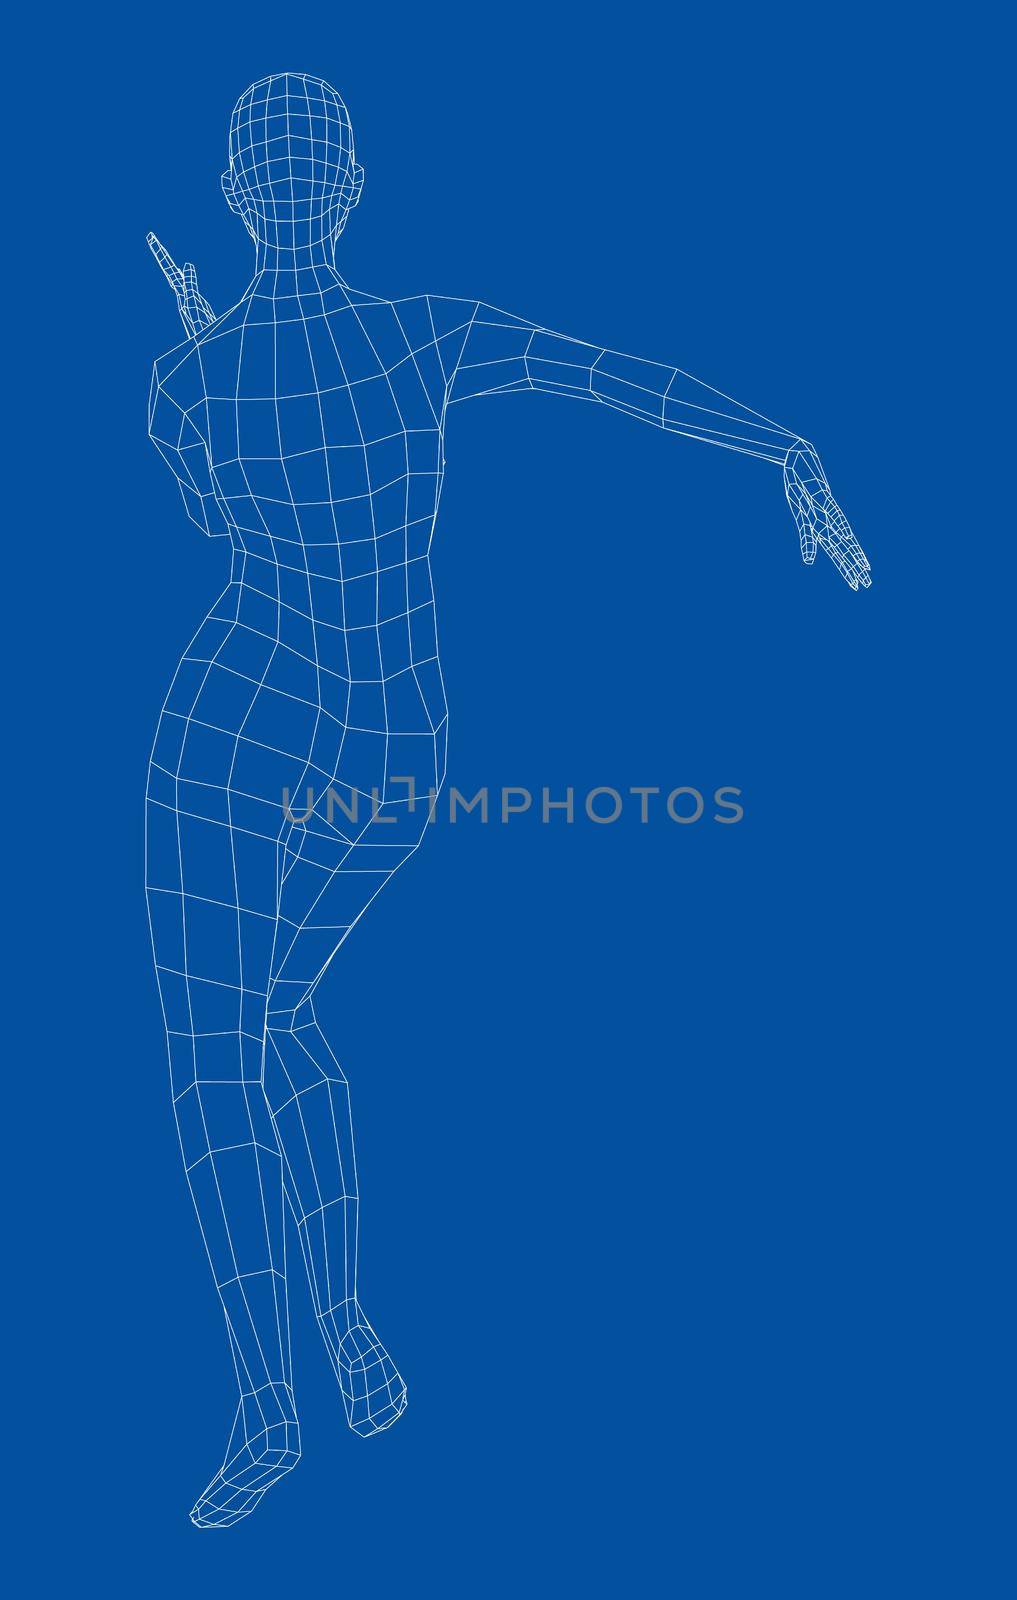 Wireframe ballerina or dancer in dance pose. Female dancing salsa. 3d illustration